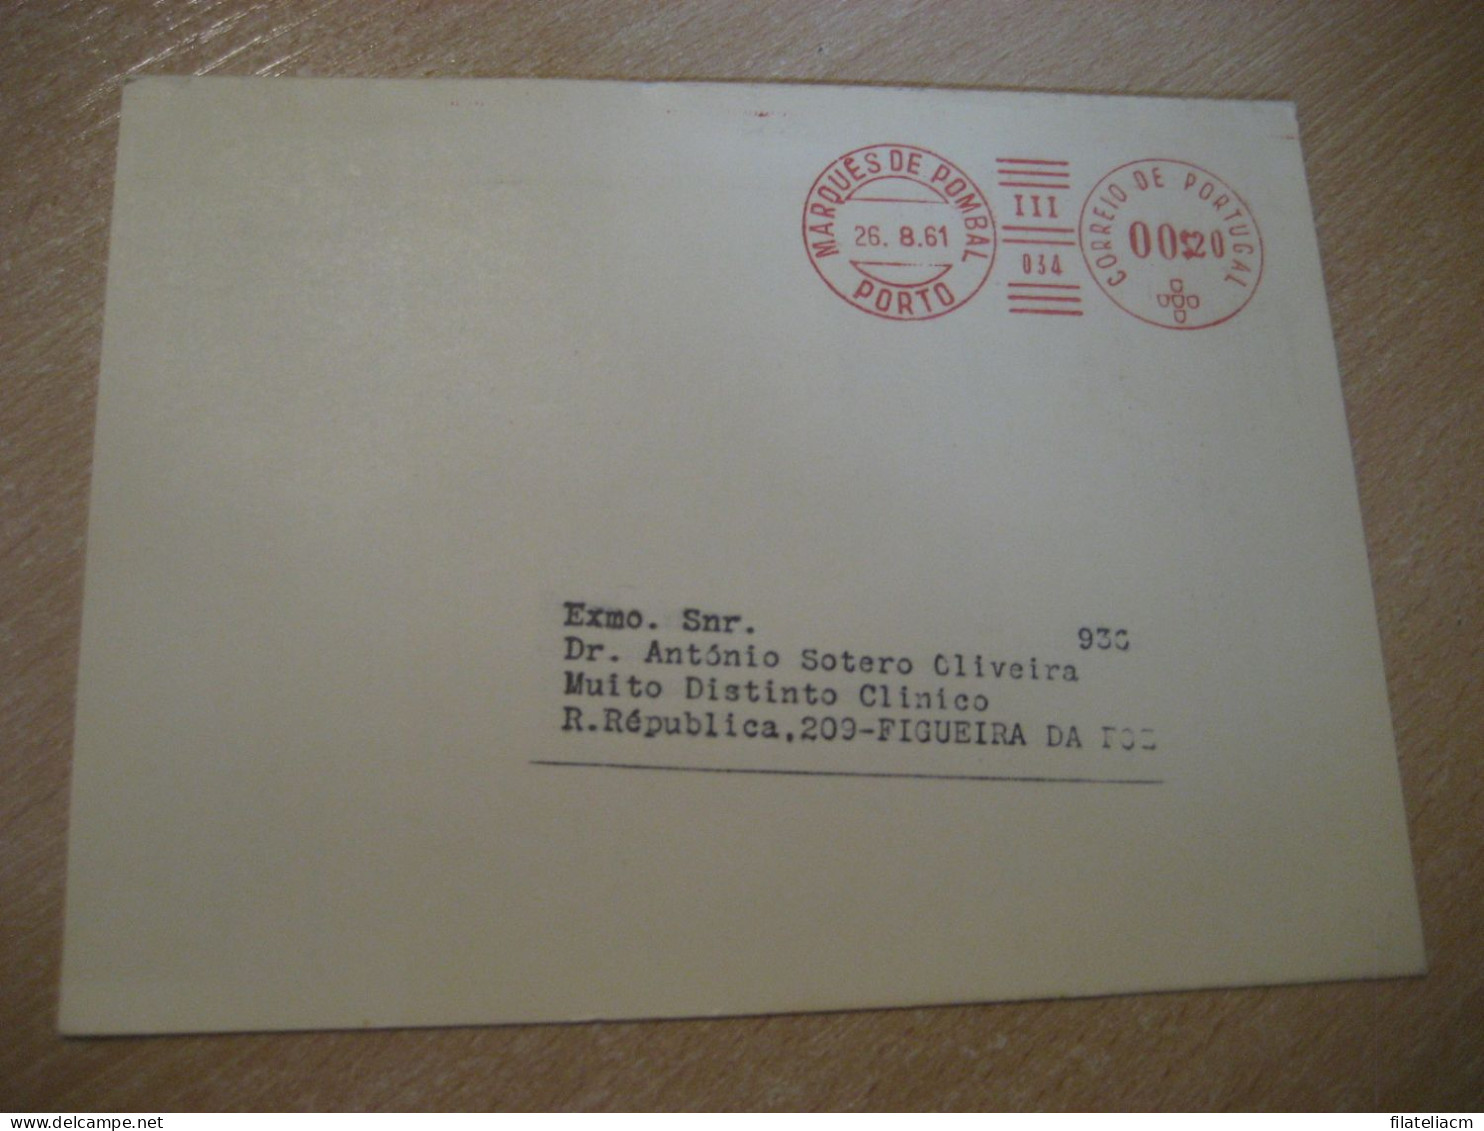 PORTO 1961 To Figueira Da Foz BIAL Cosatetril Tetraciclina Glucosamina Pharmacy Health Meter Mail Document Card PORTUGAL - Covers & Documents